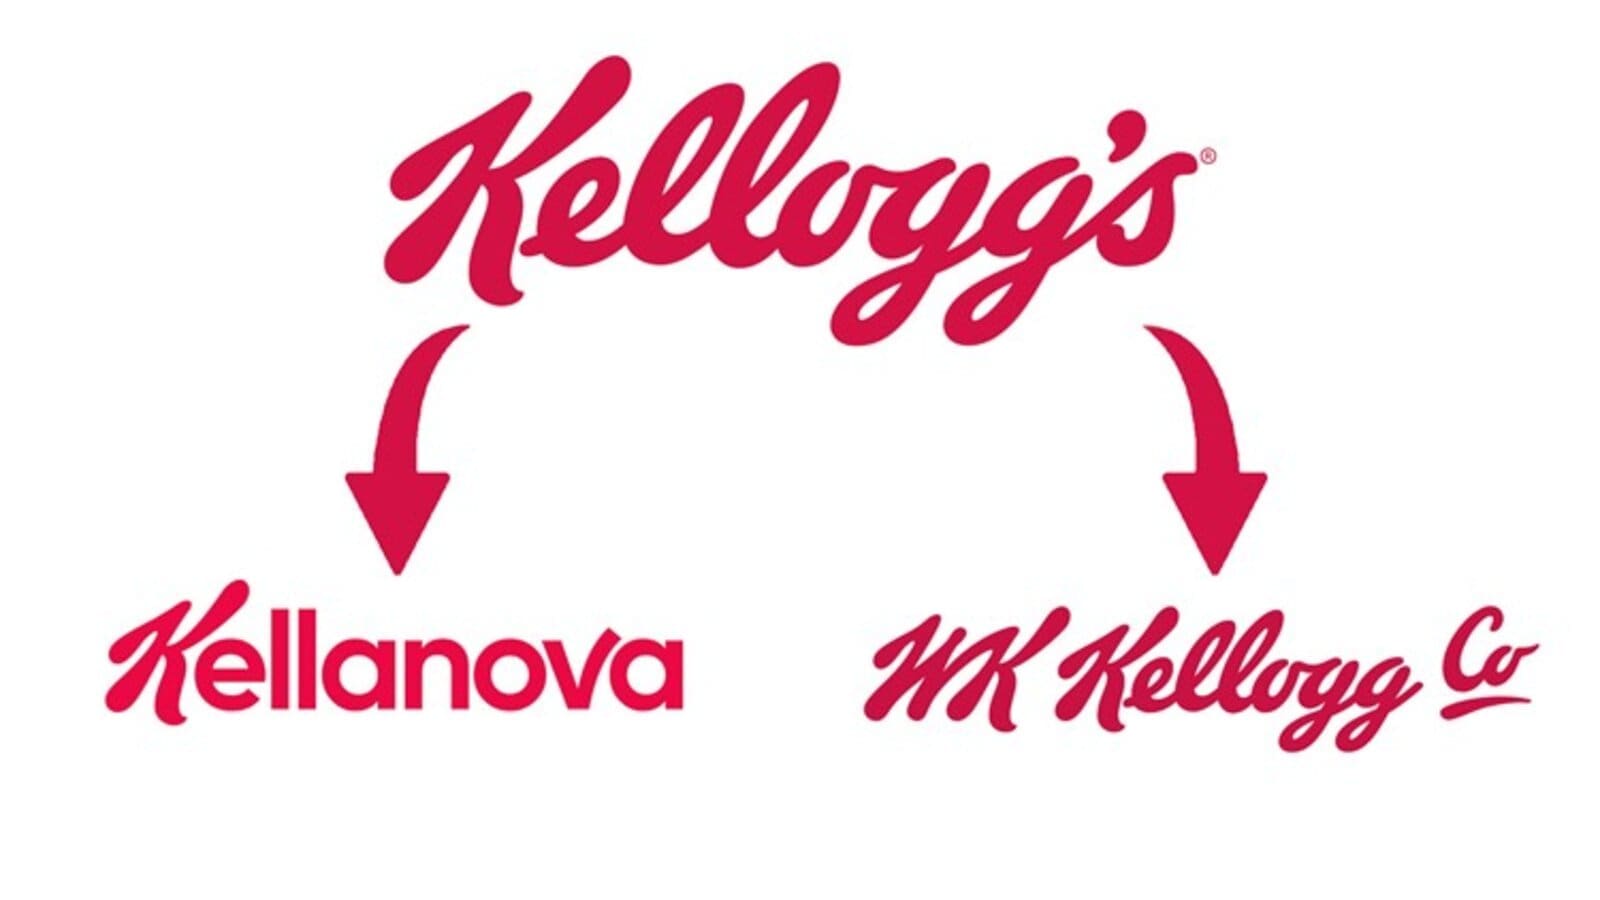 Kellogg’s formally approved to trade as two companies Kellanova and WK Kellogg Co